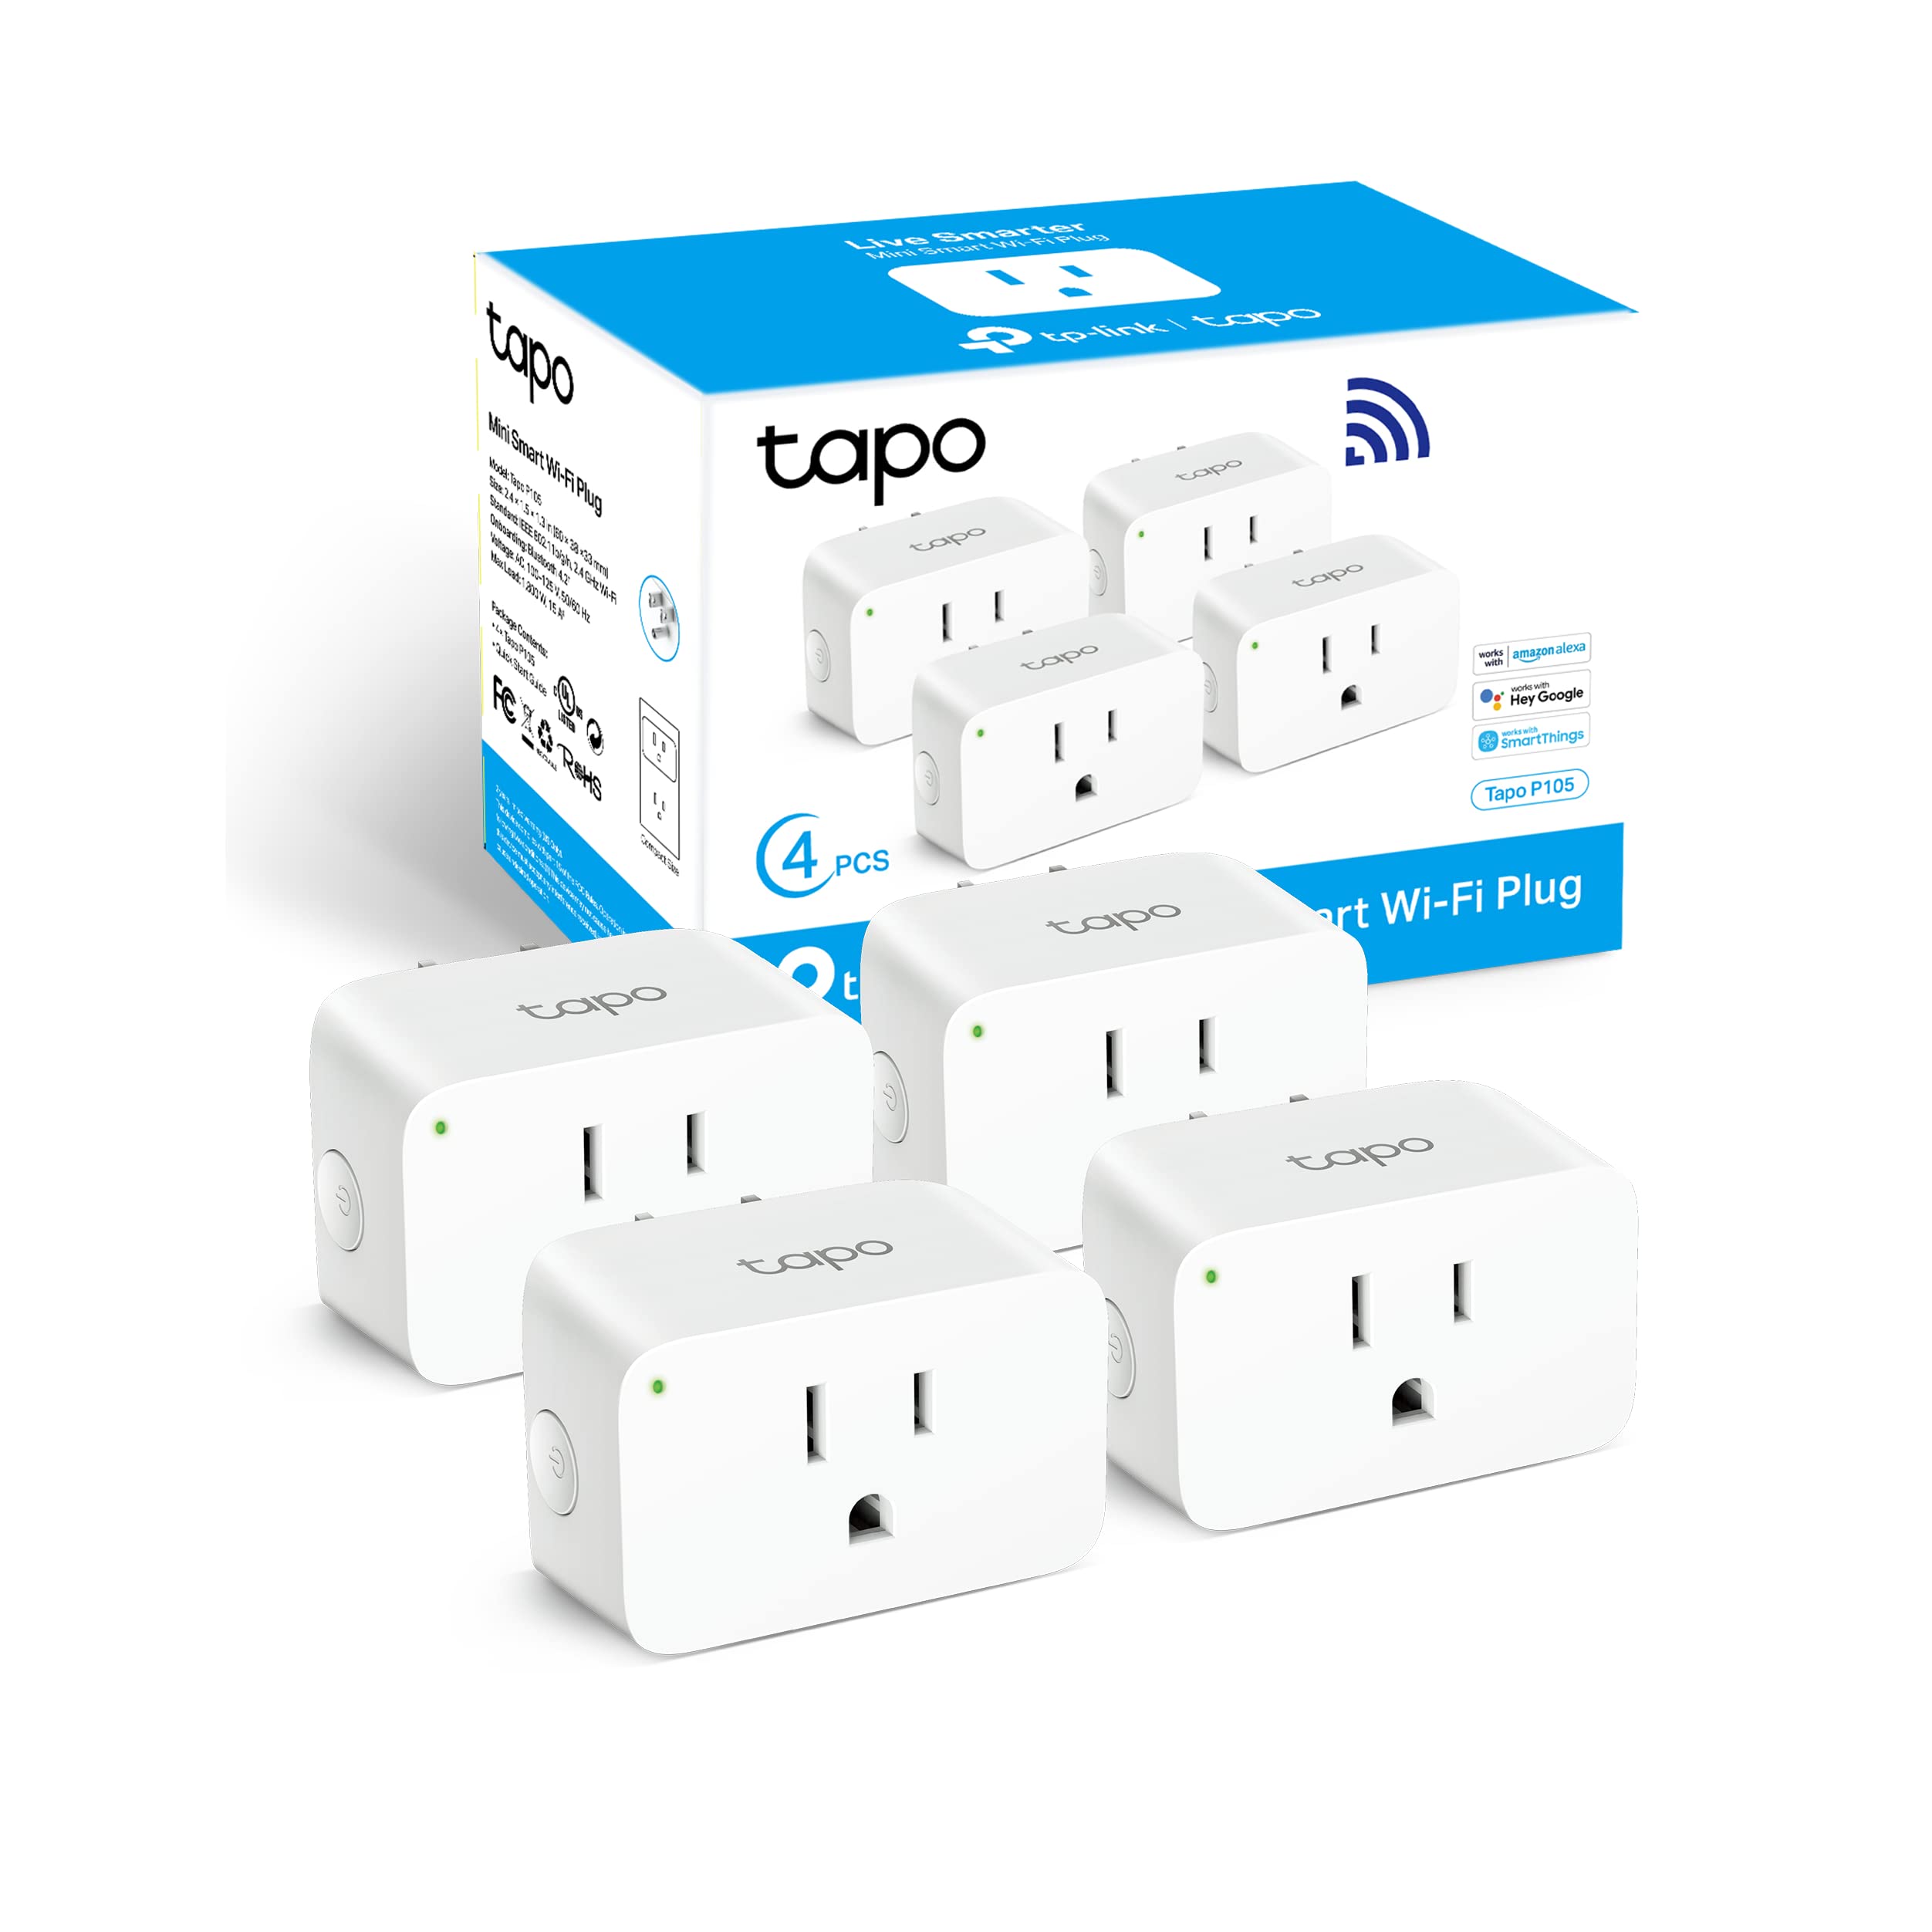 4-Pack TP-Link Tapo Mini 15A Smart Wi-Fi Plugs $20 w/ Prime shipping @Amazon